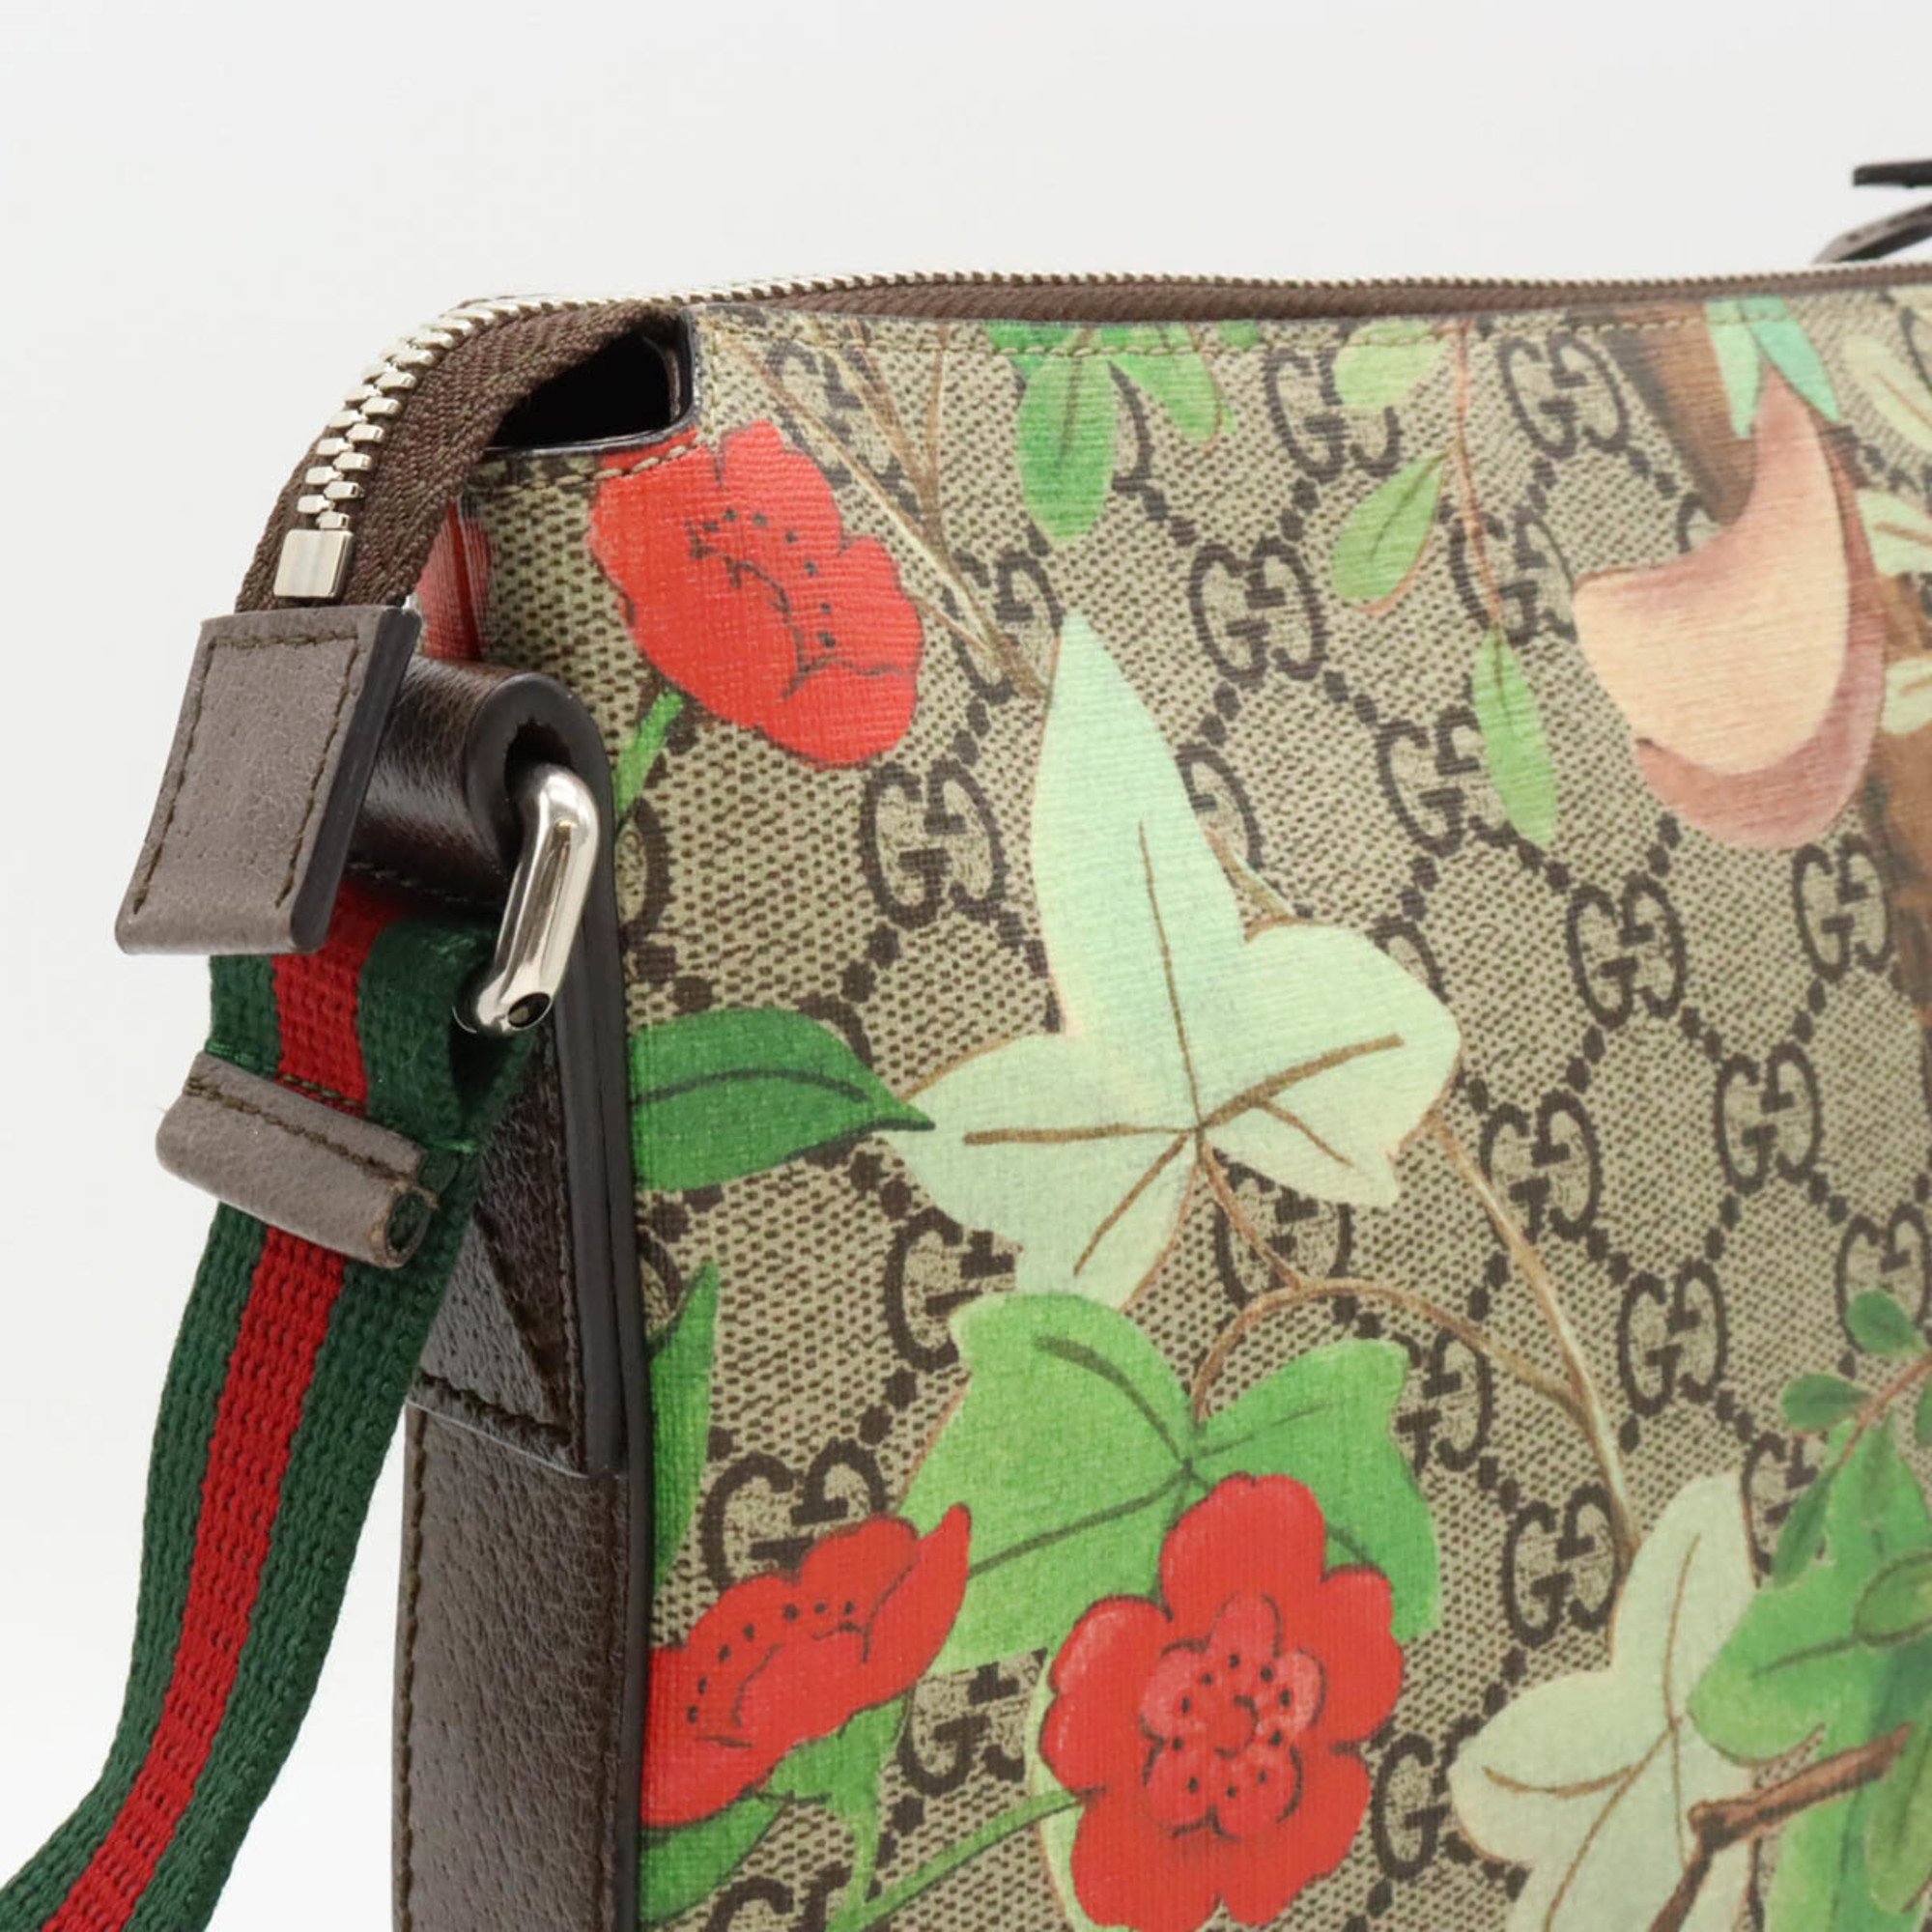 GUCCI Gucci Tian GG Supreme Sherry Line Shoulder Bag Bird Flower PVC Khaki Beige Multicolor 406408